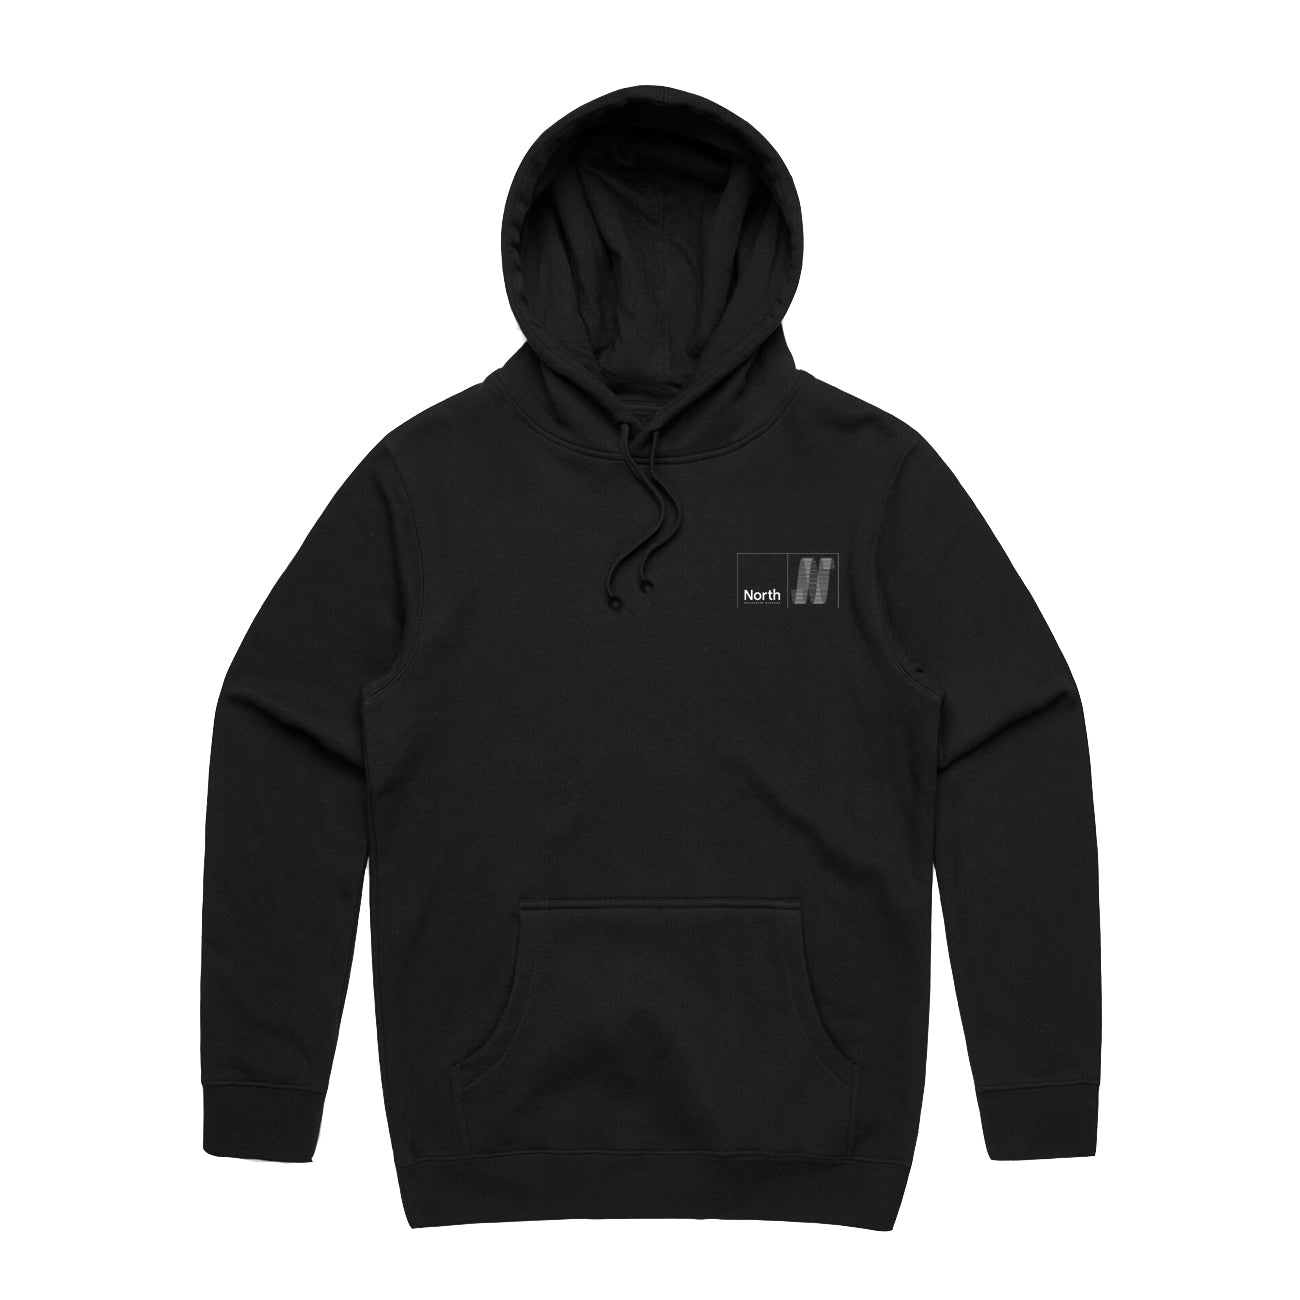 North N Logo Hooded Sweatshirt - Black/White